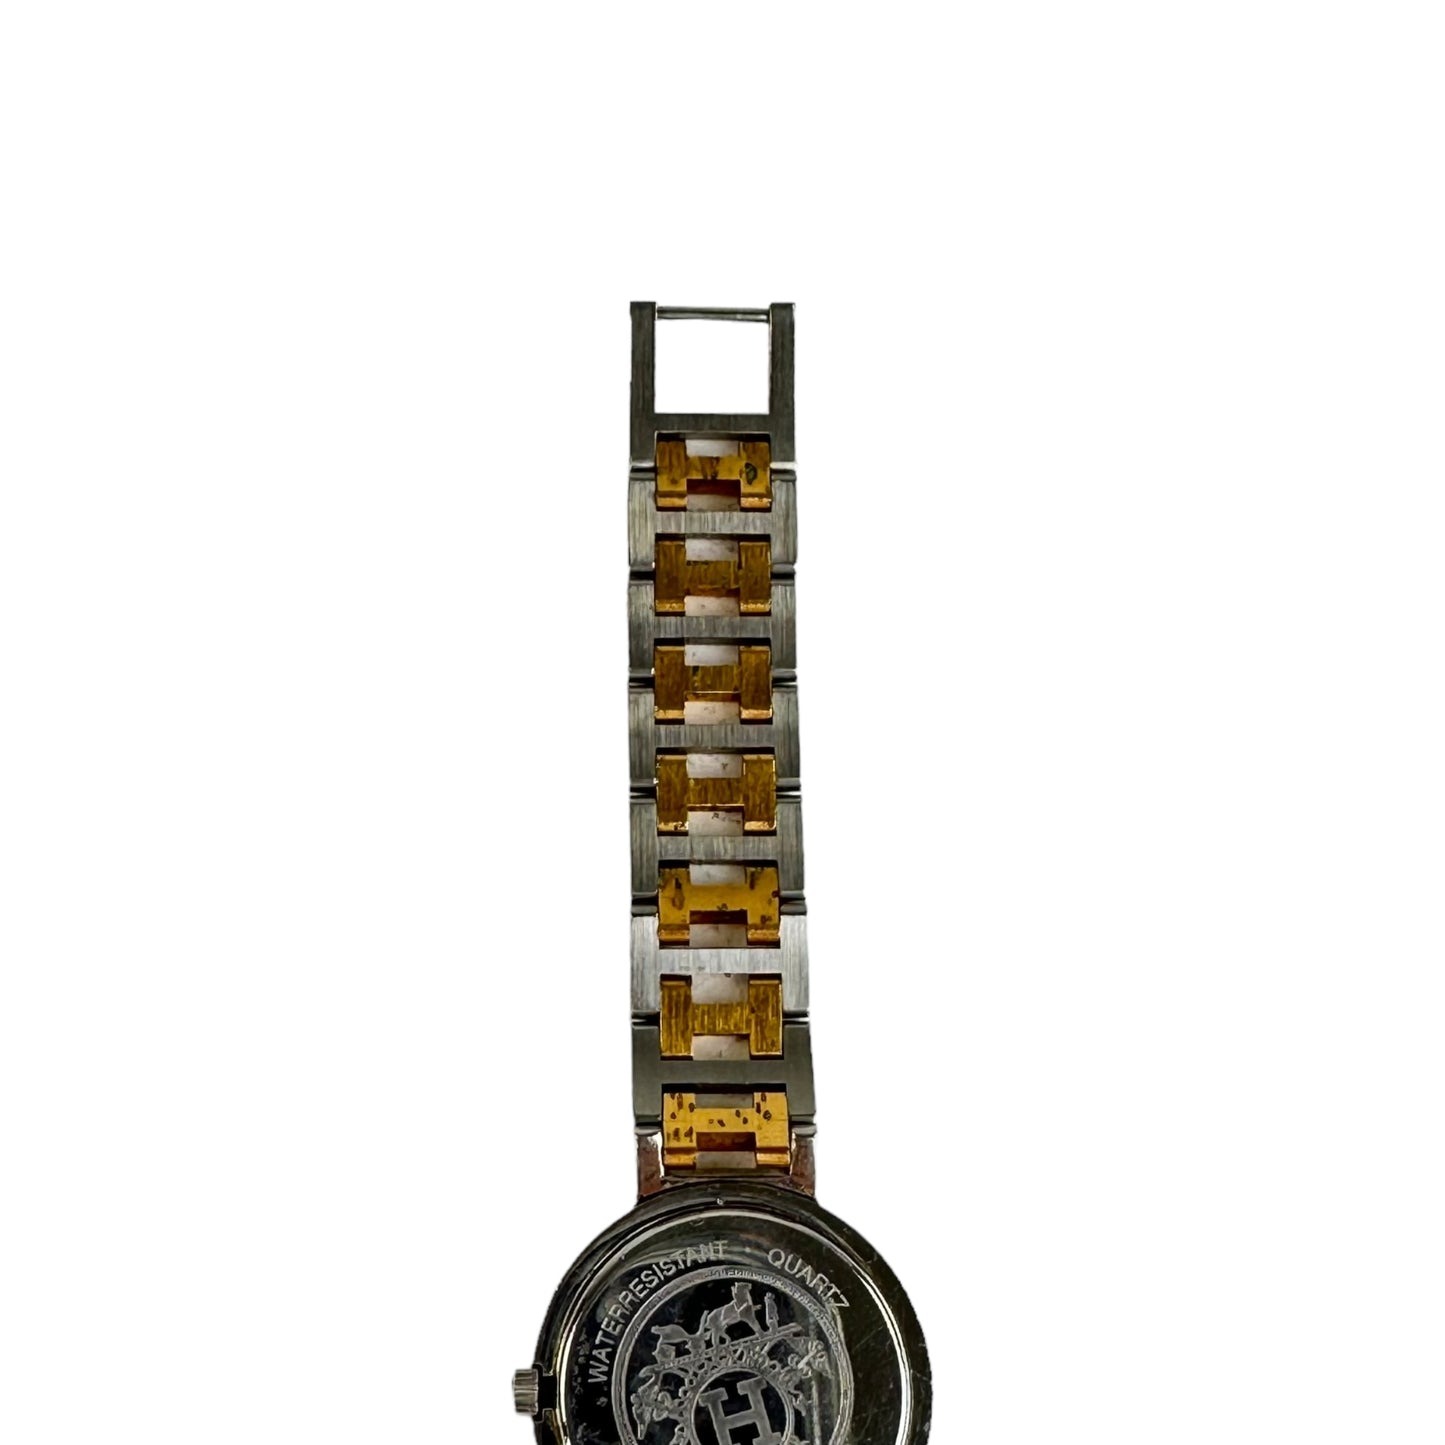 Hermes Clipper Quartz Stainless Steel Watch